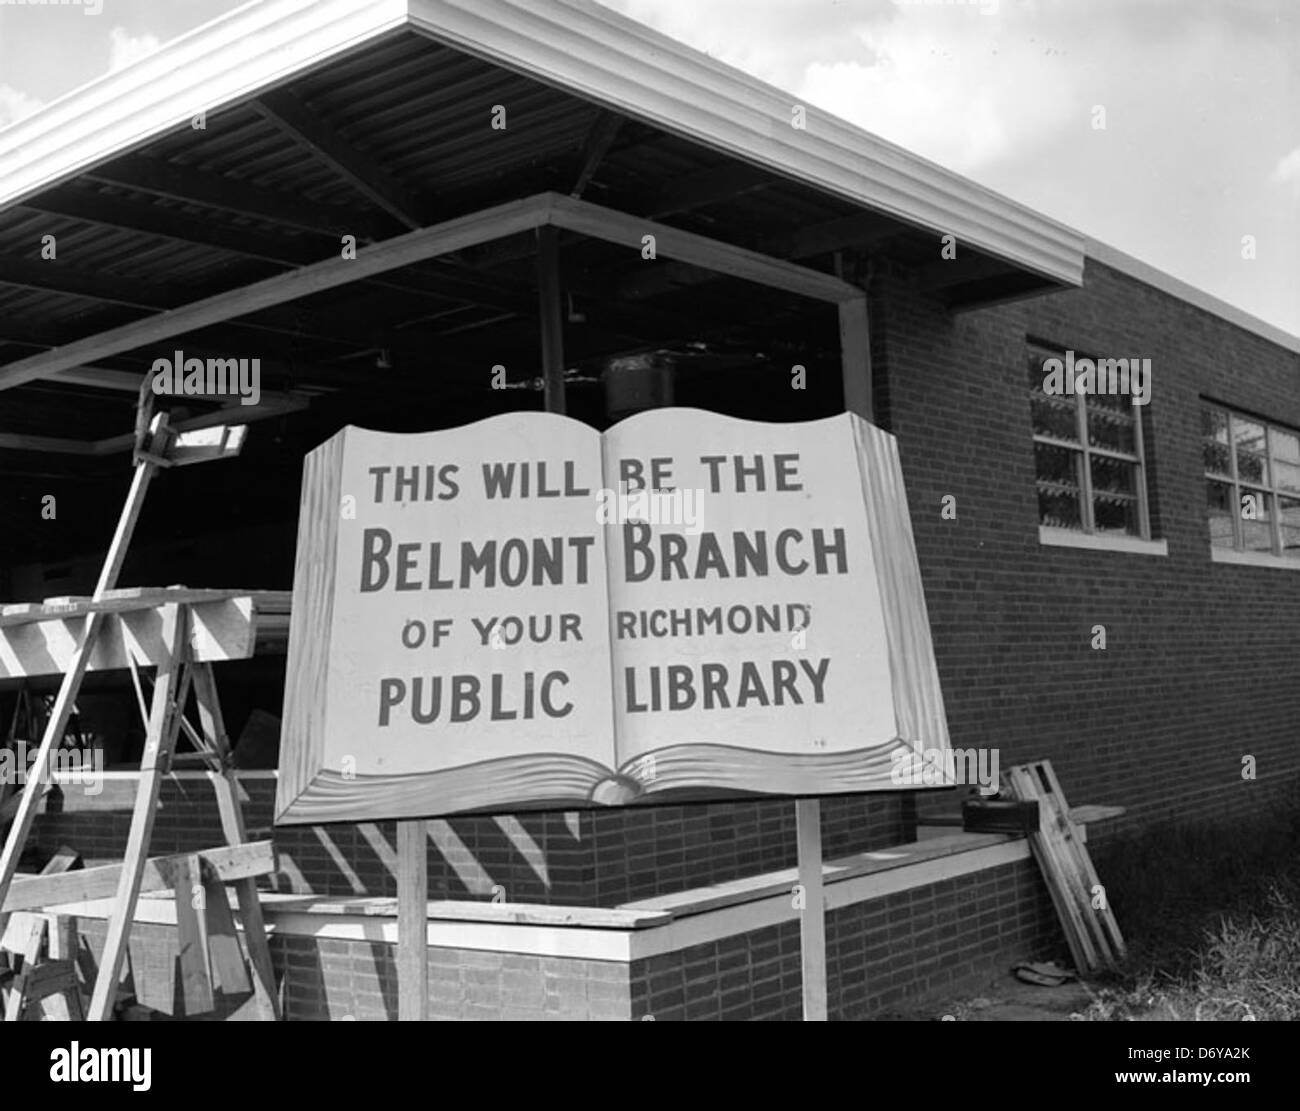 City, public library, Belmont Branch construction Stock Photo